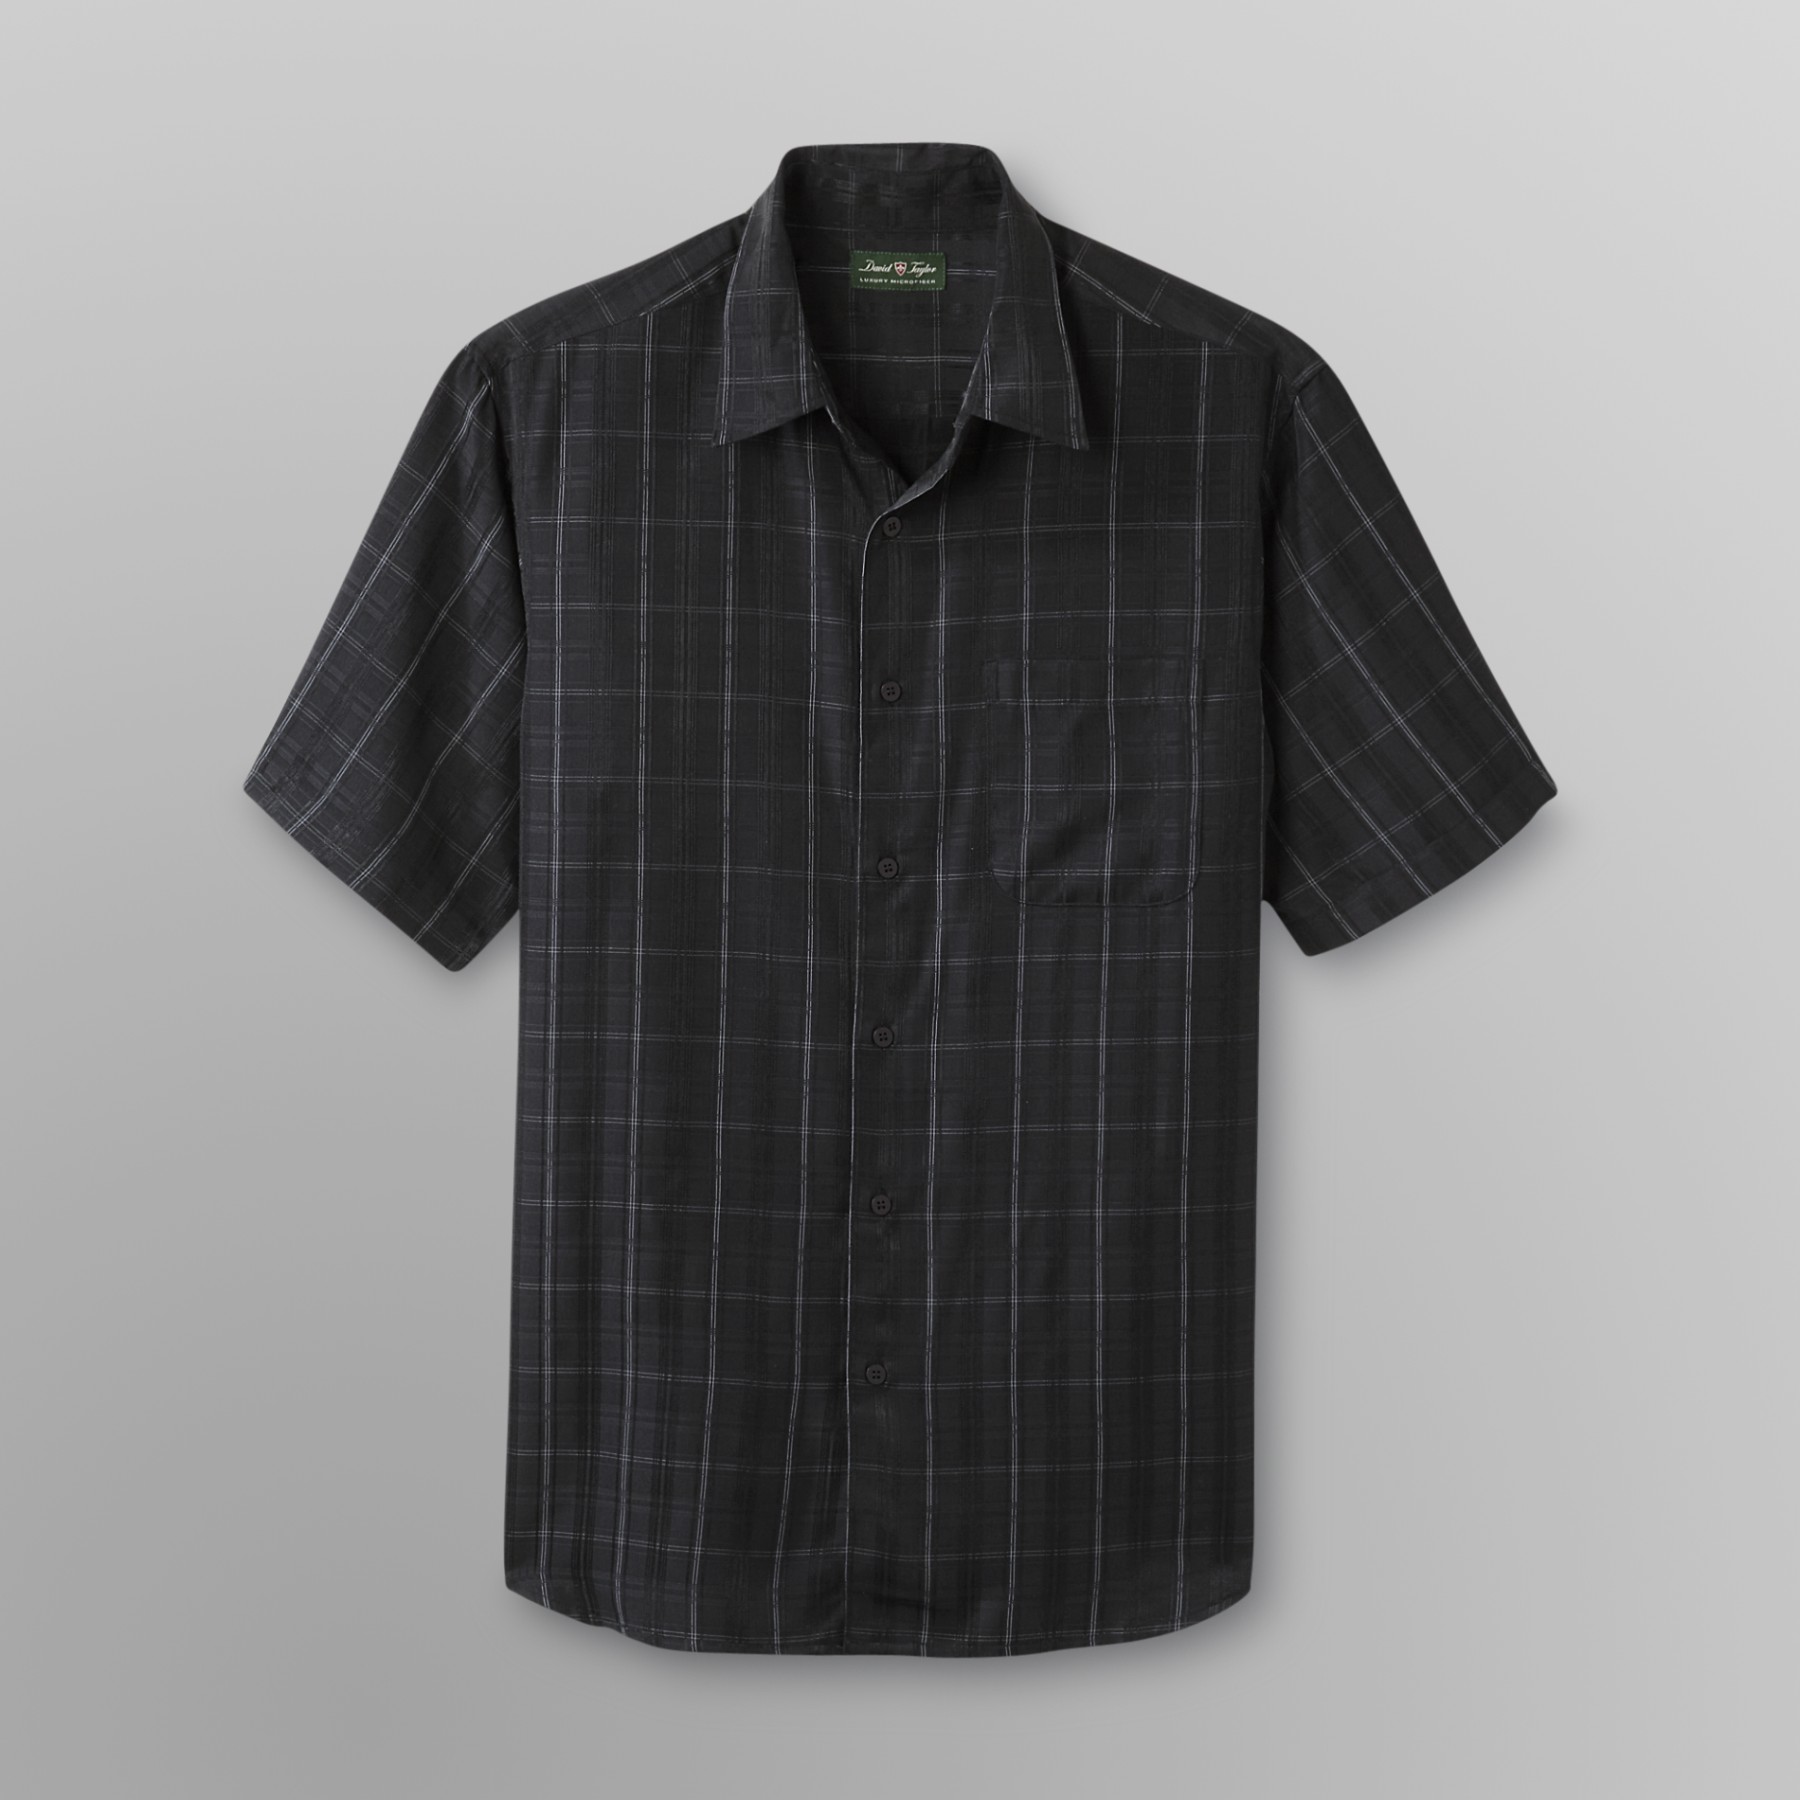 David Taylor Collection Men's Short-Sleeve Shirt - Plaid Microfiber